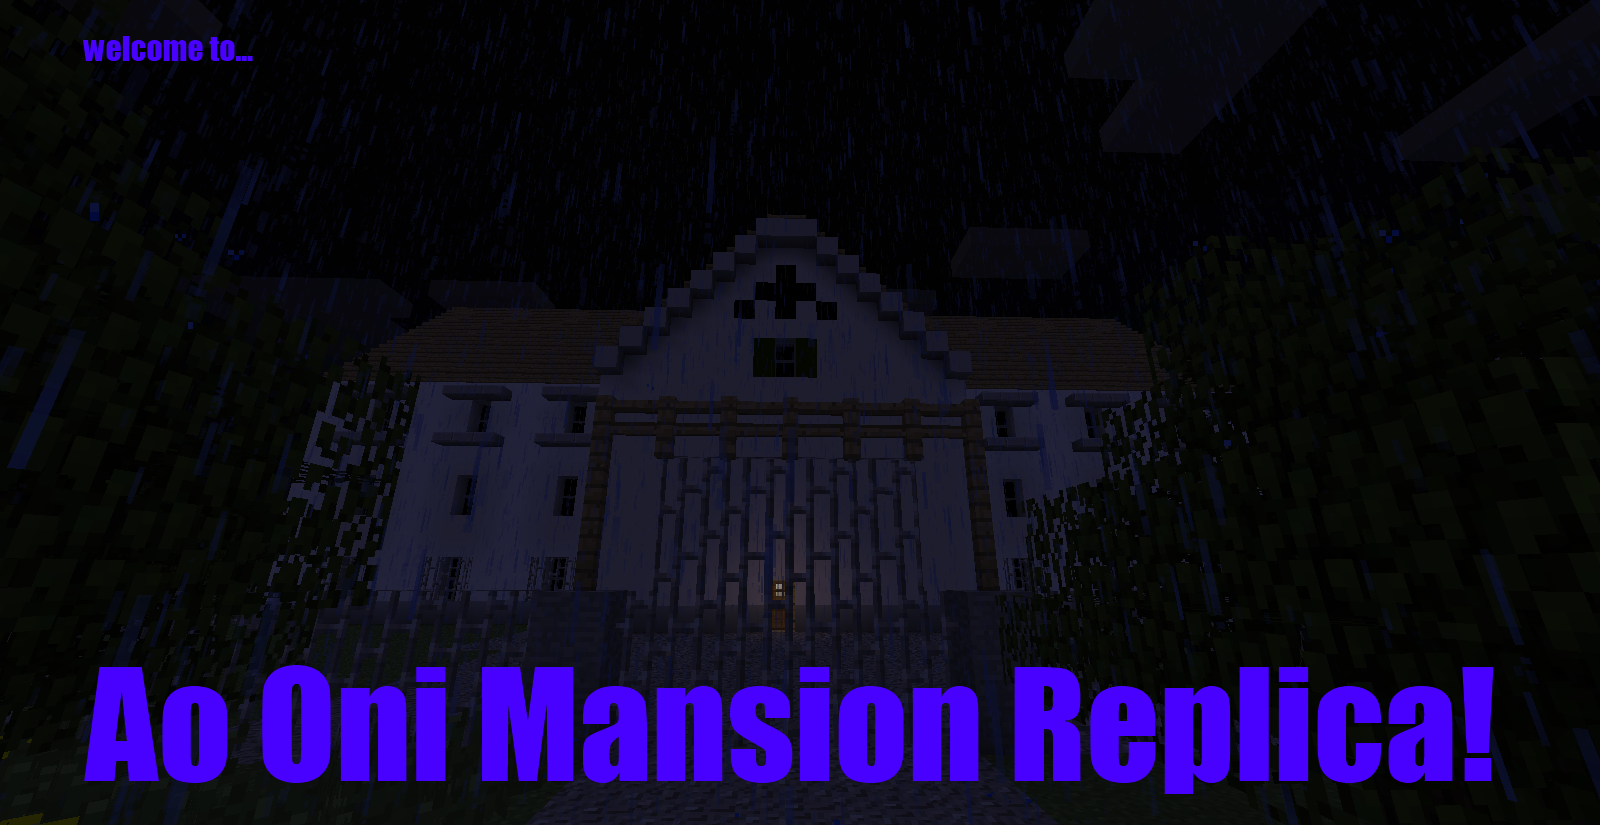 Ao Oni Mansion Minecraft Map